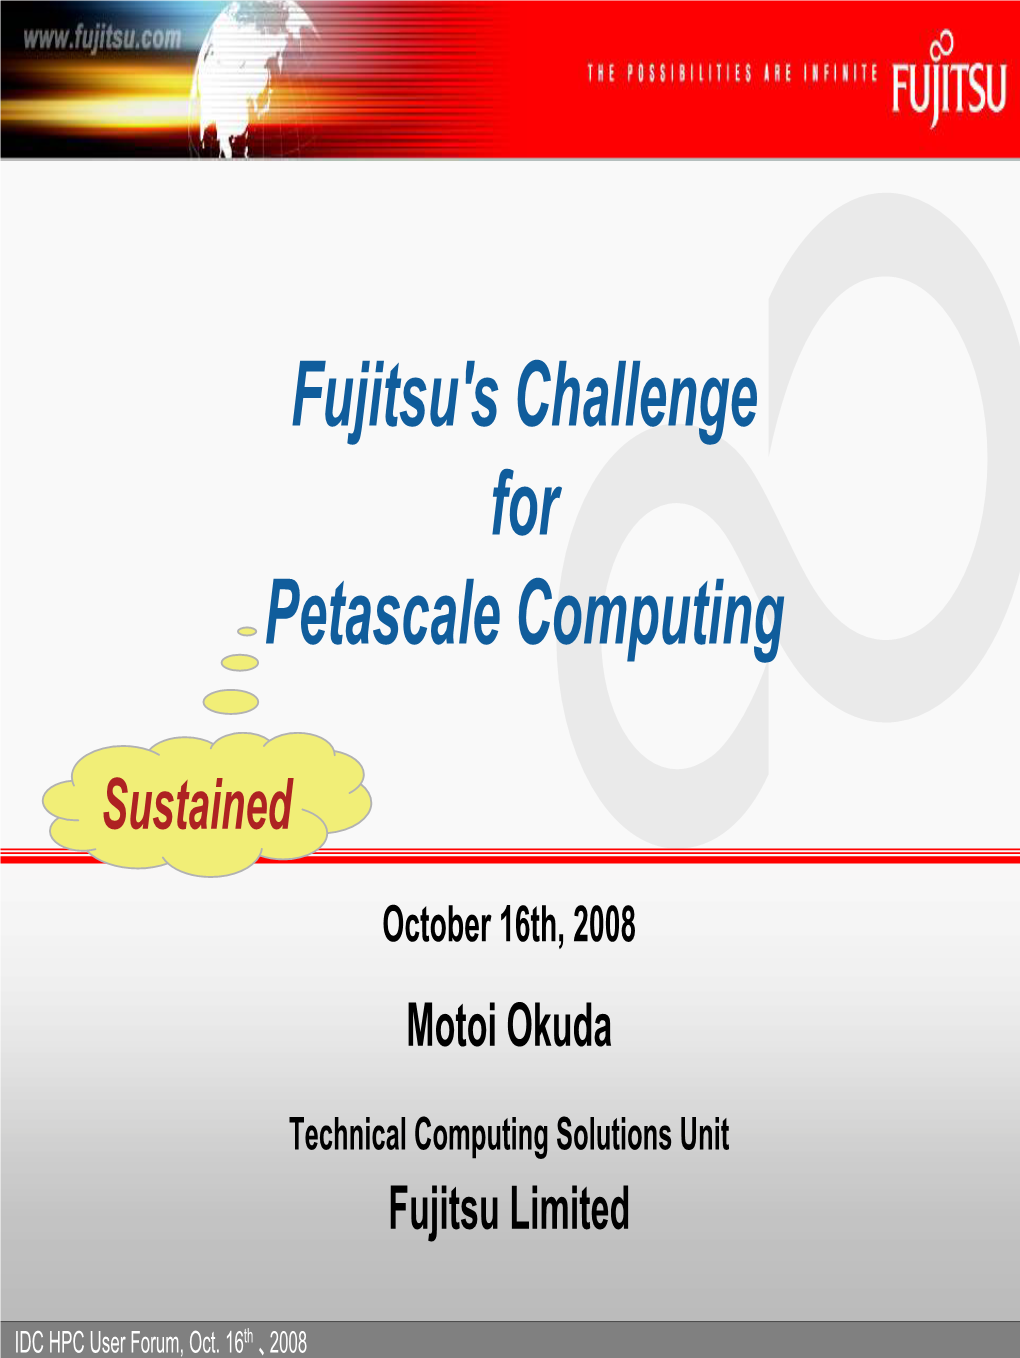 Fujitsu's Vision for High Performance Computing